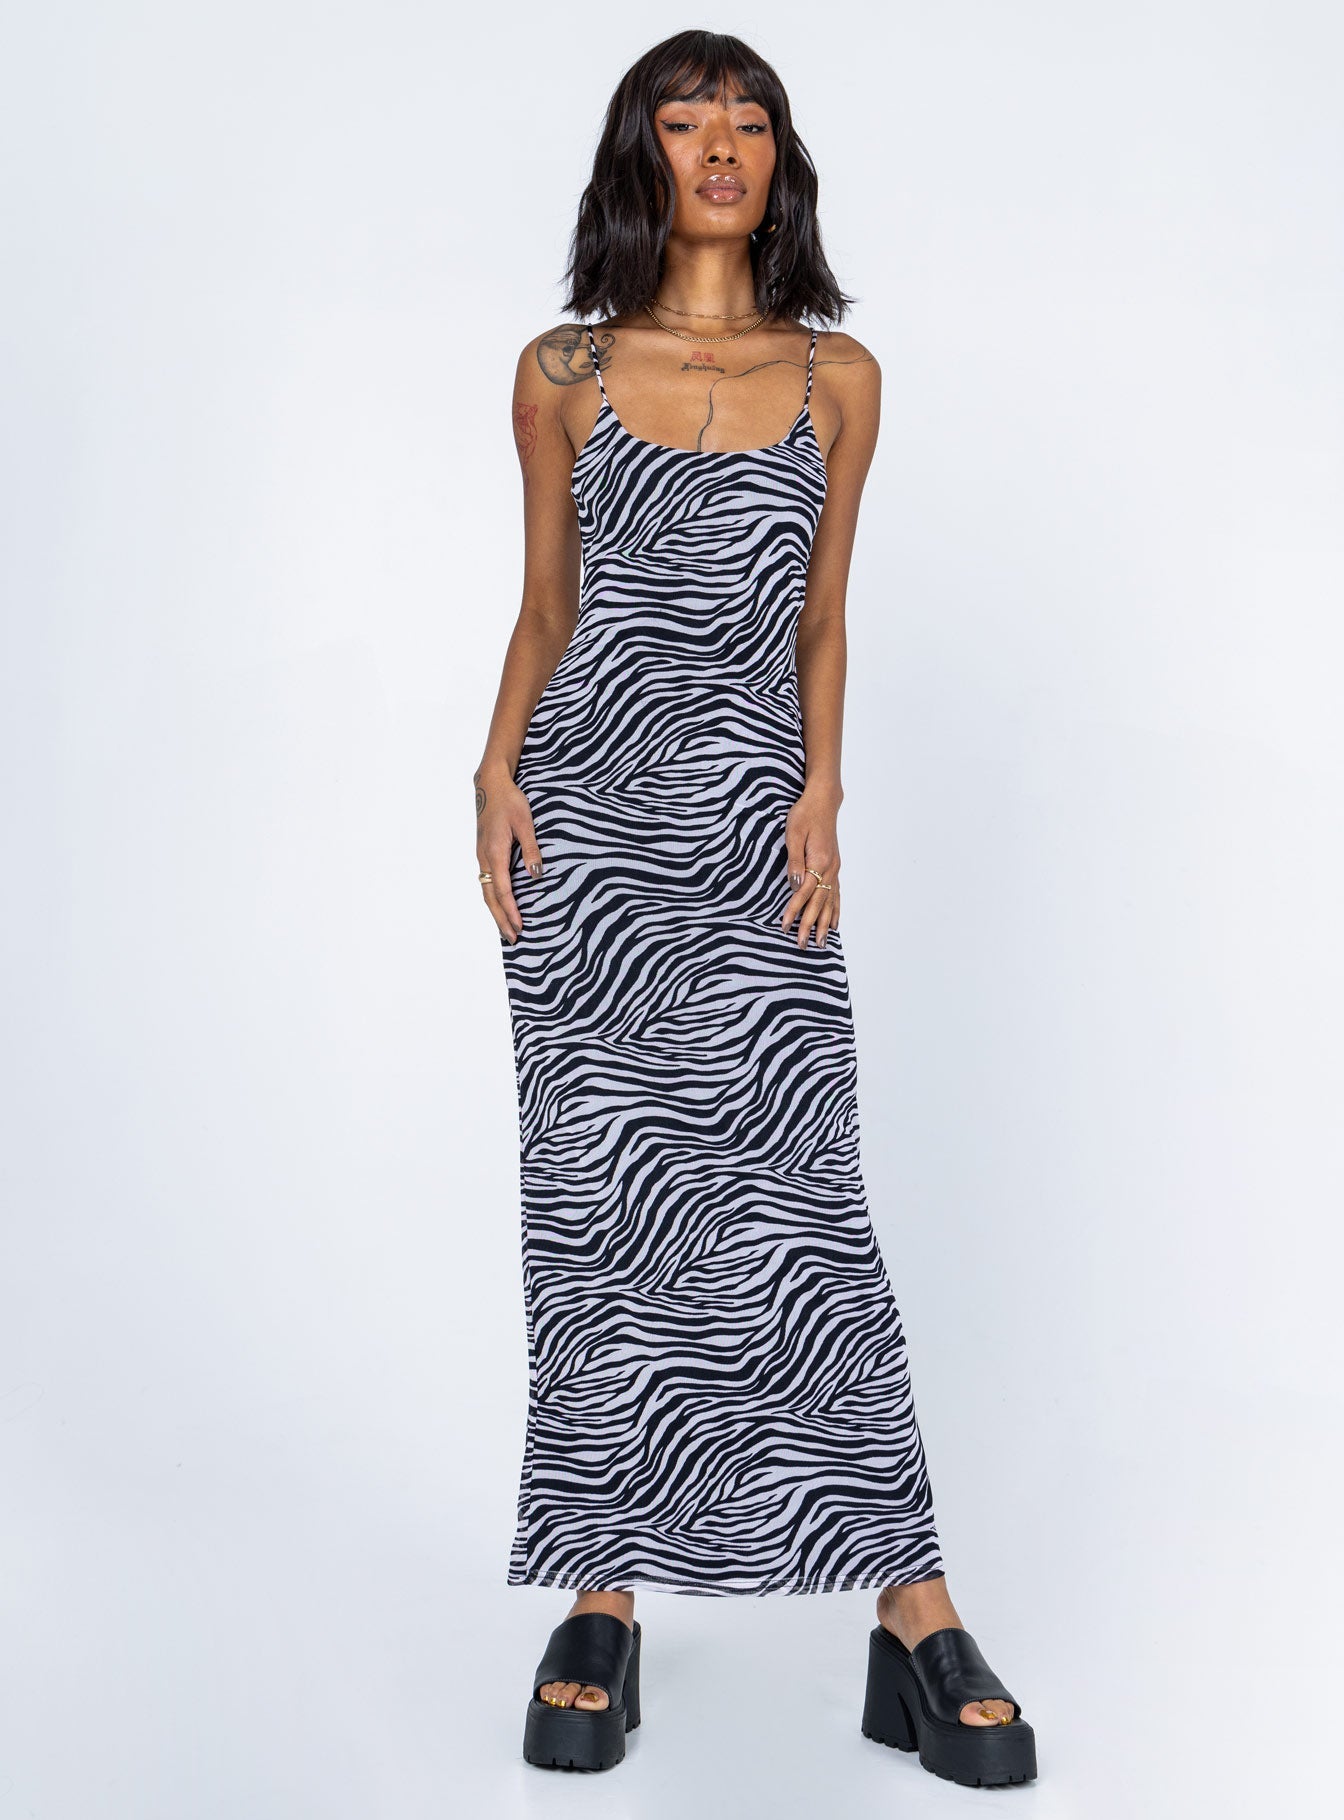 Shop Formal Dress - Knox Maxi Dress Zebra sixth image